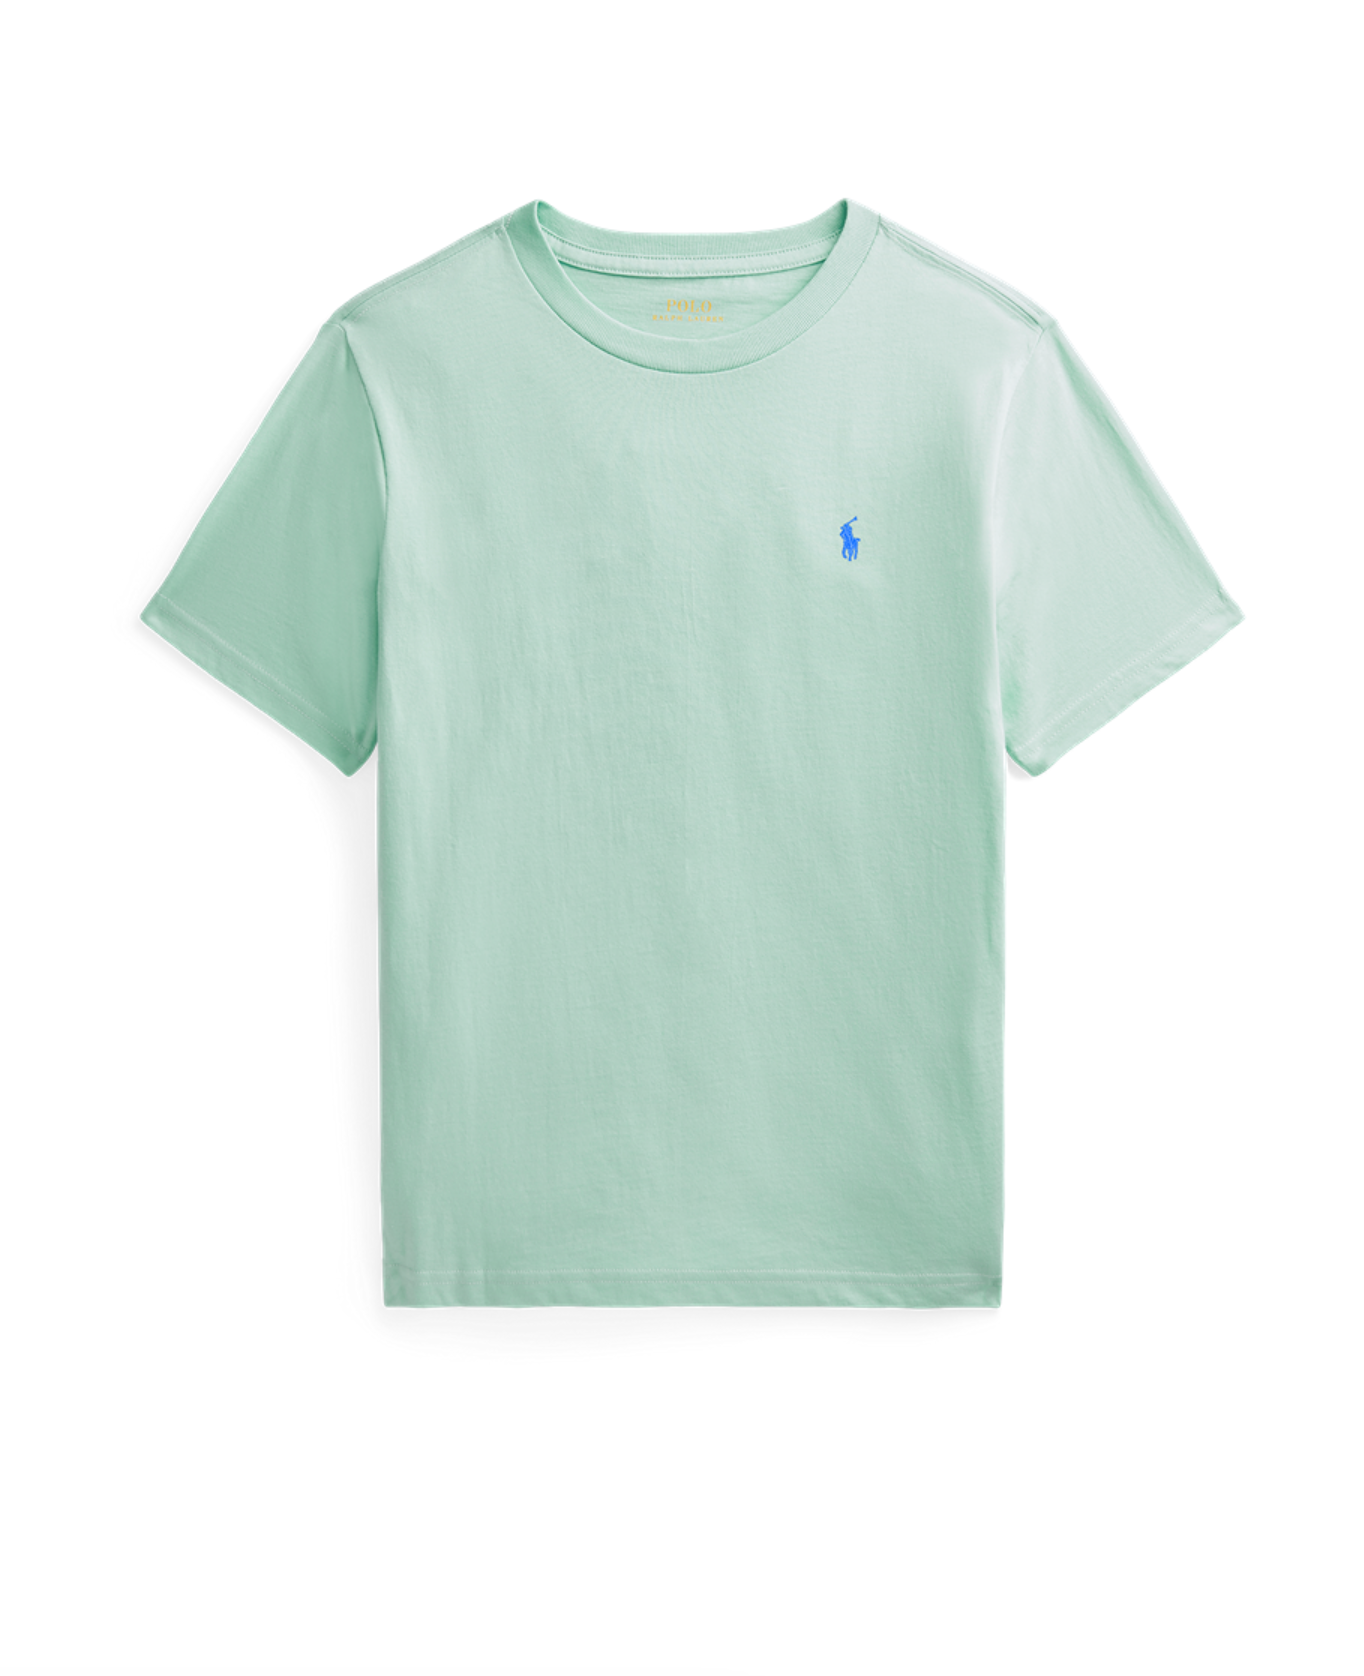 Short Sleeve T-Shirt in Celadon Sizes 8-20